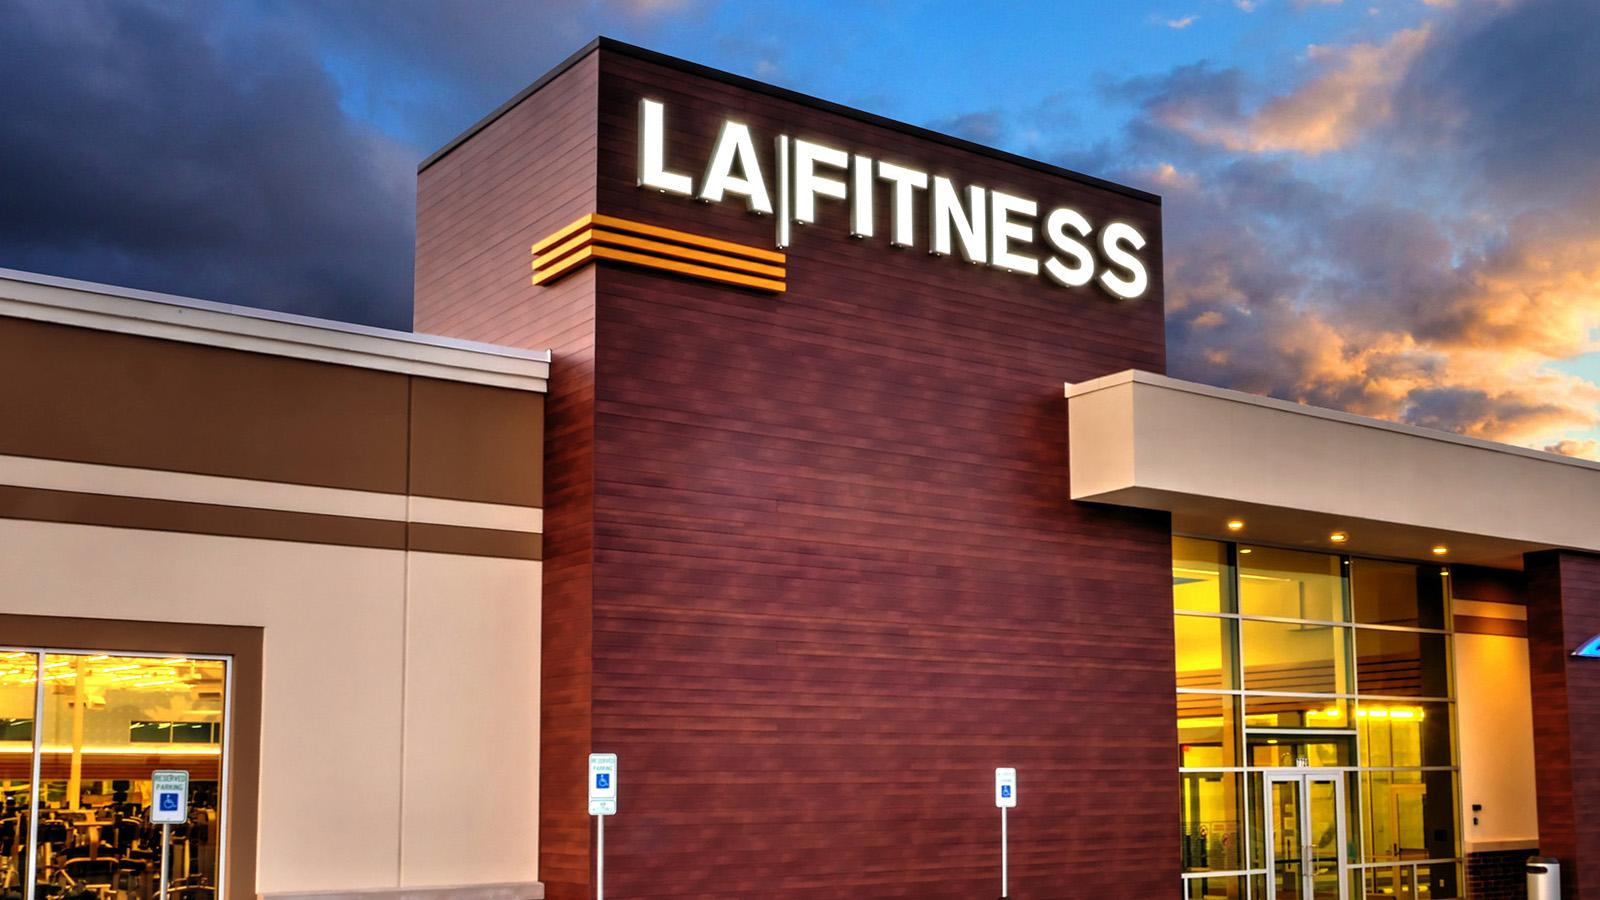 LA fitness sign on building